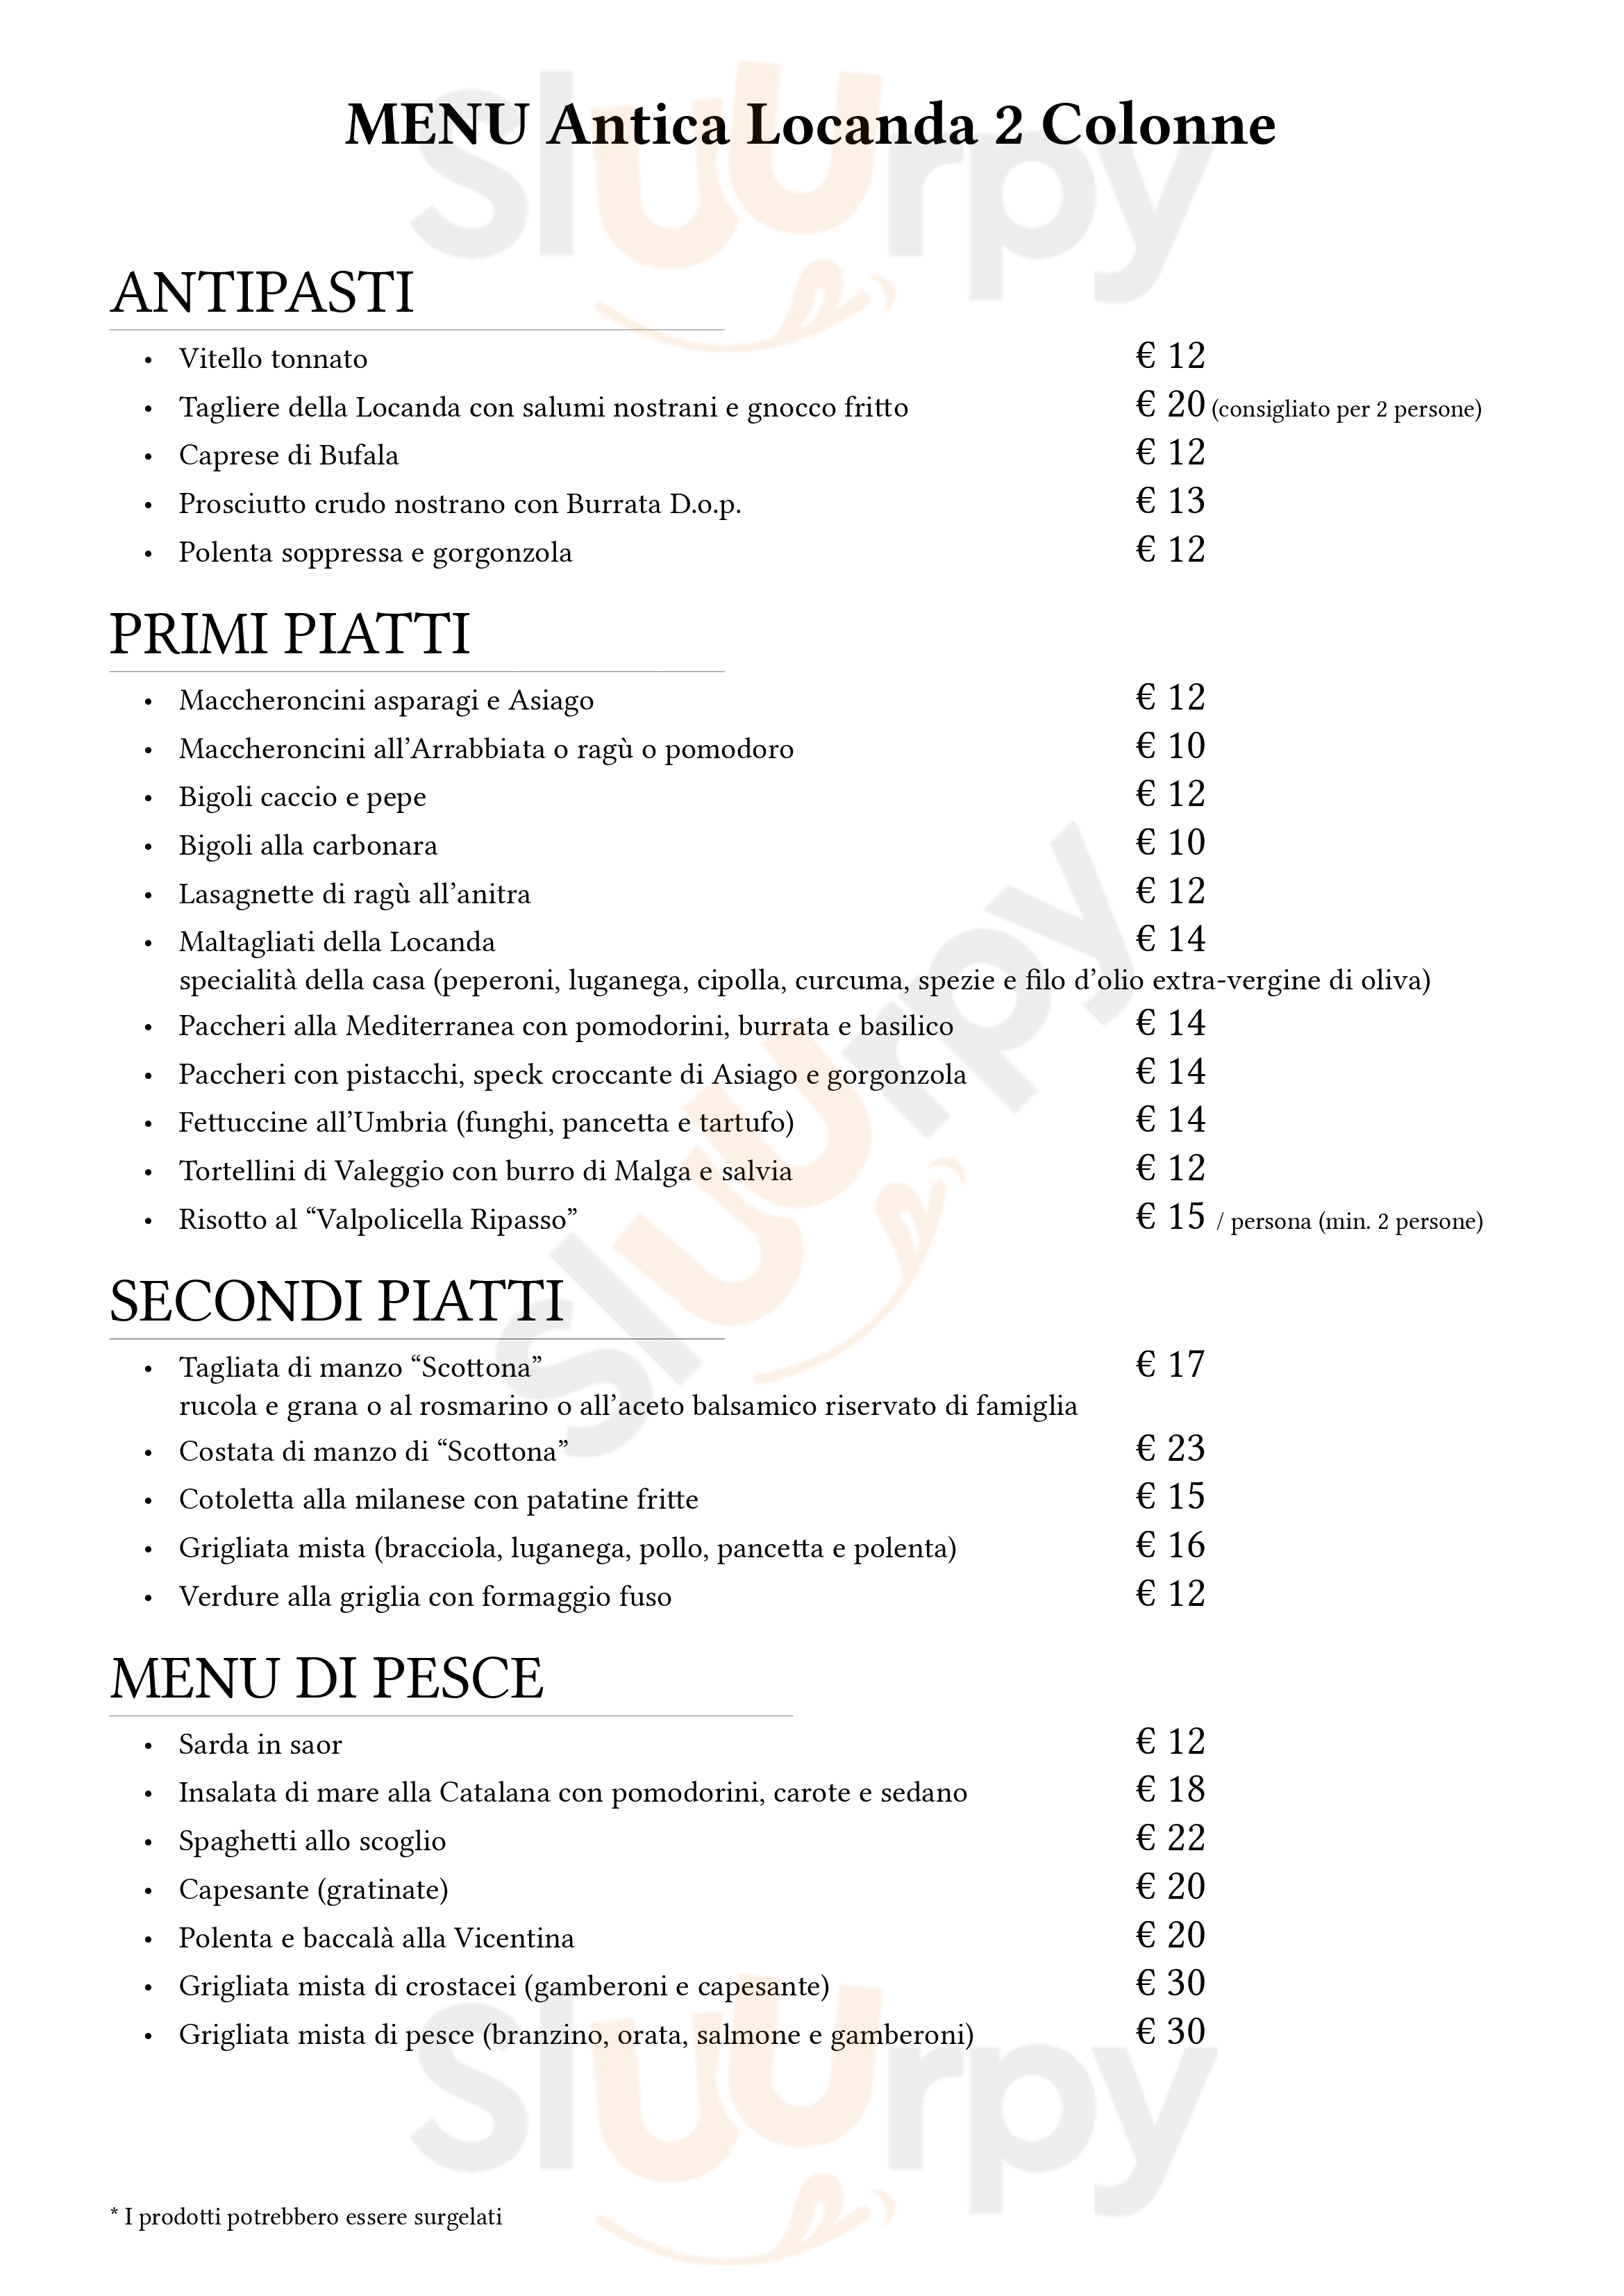 Hotel Ristorante Due Colonne Verona menù 1 pagina